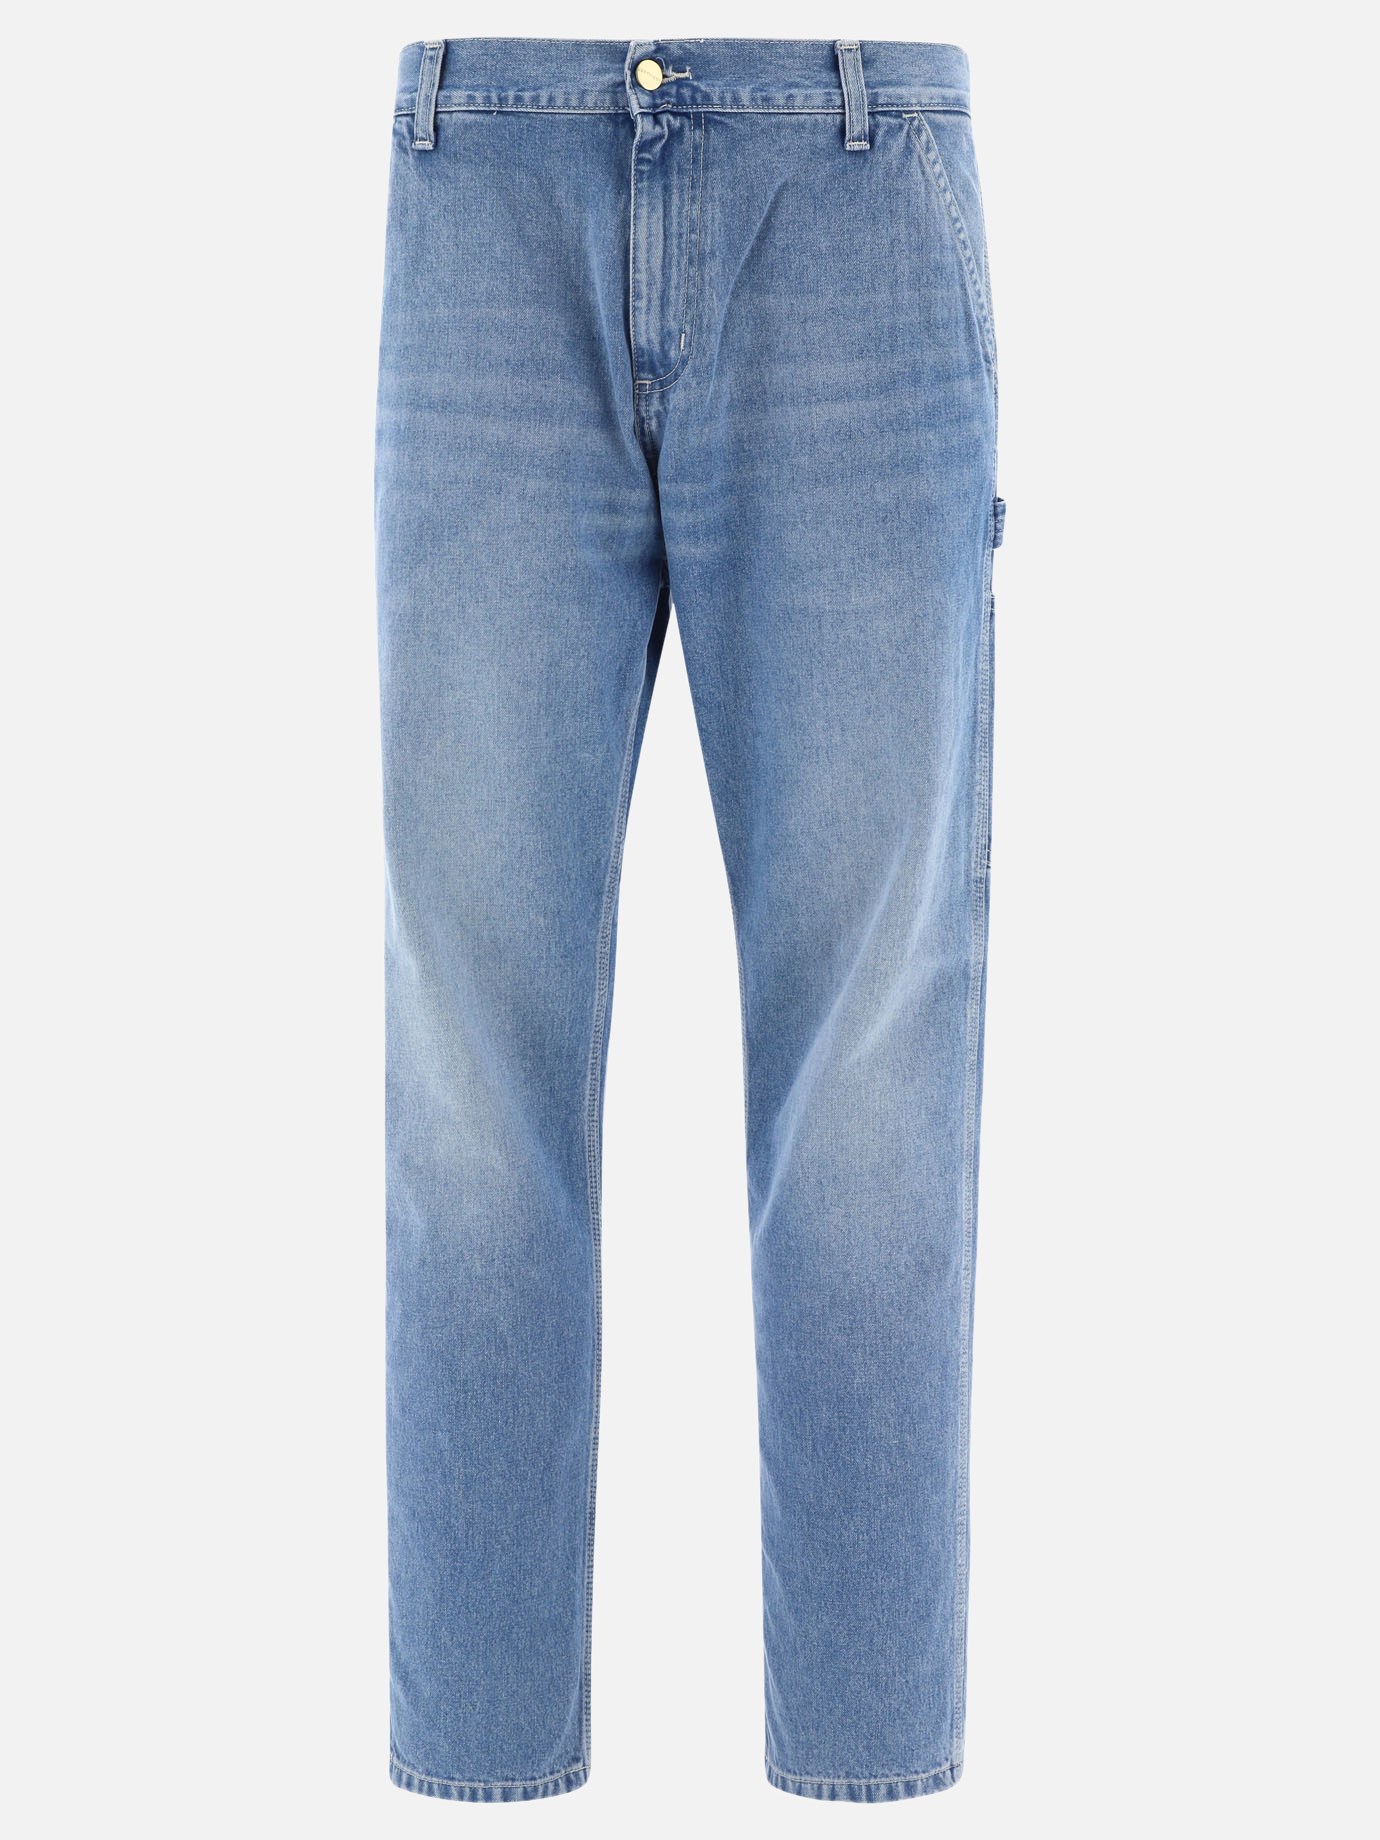 Jeans  Ruck Single Knee by Carhartt WIP - 5